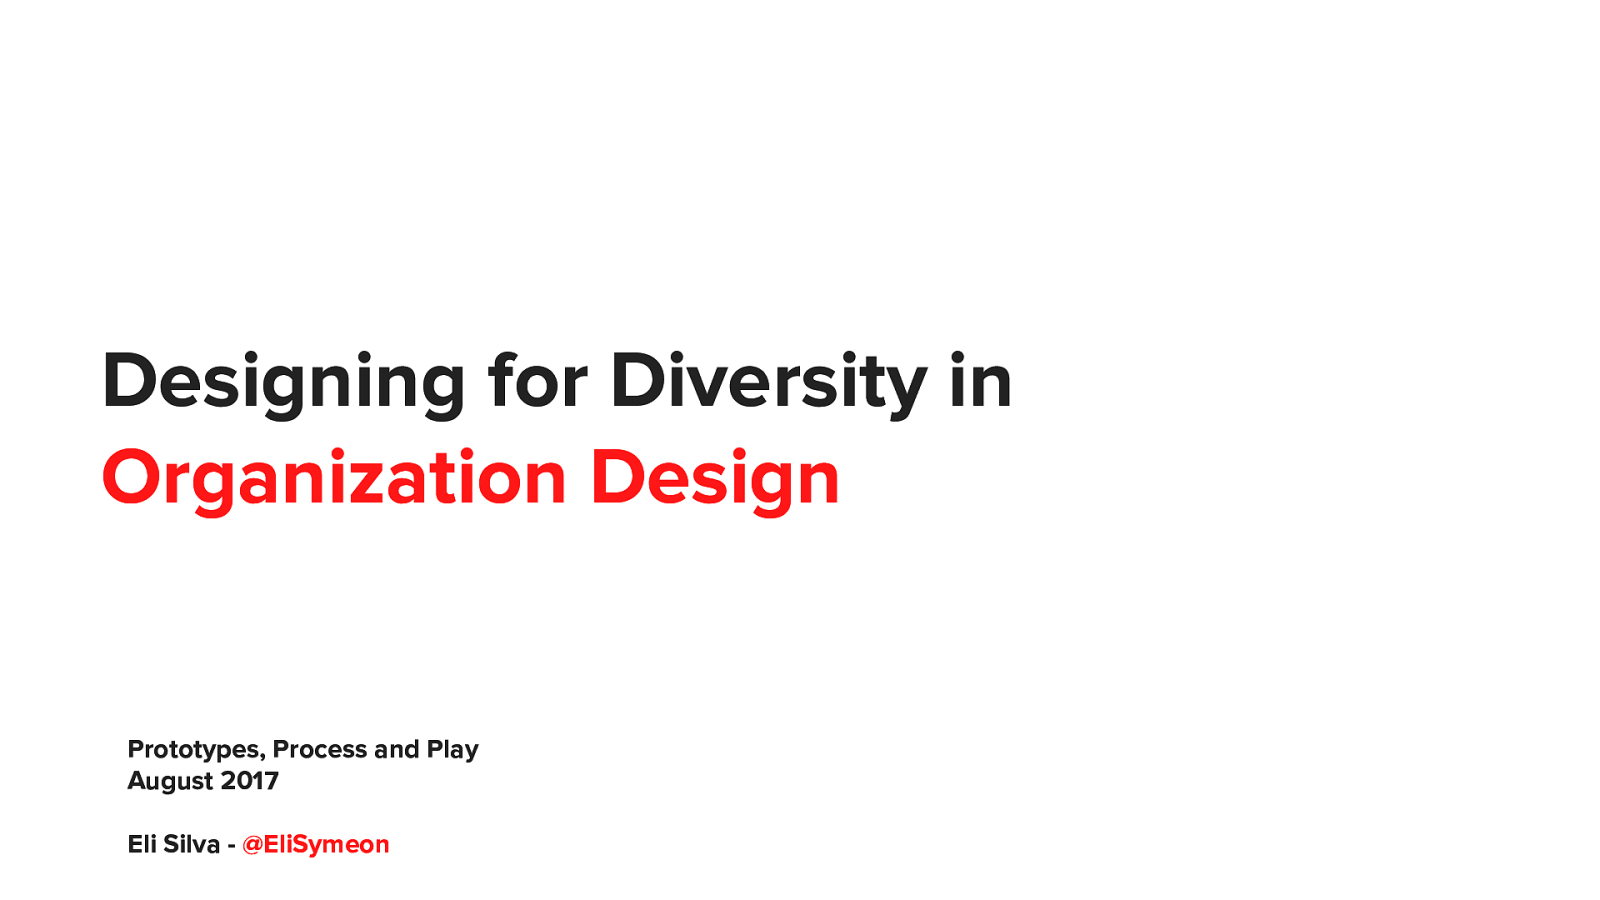 Designing for Diversity in Design Organizations